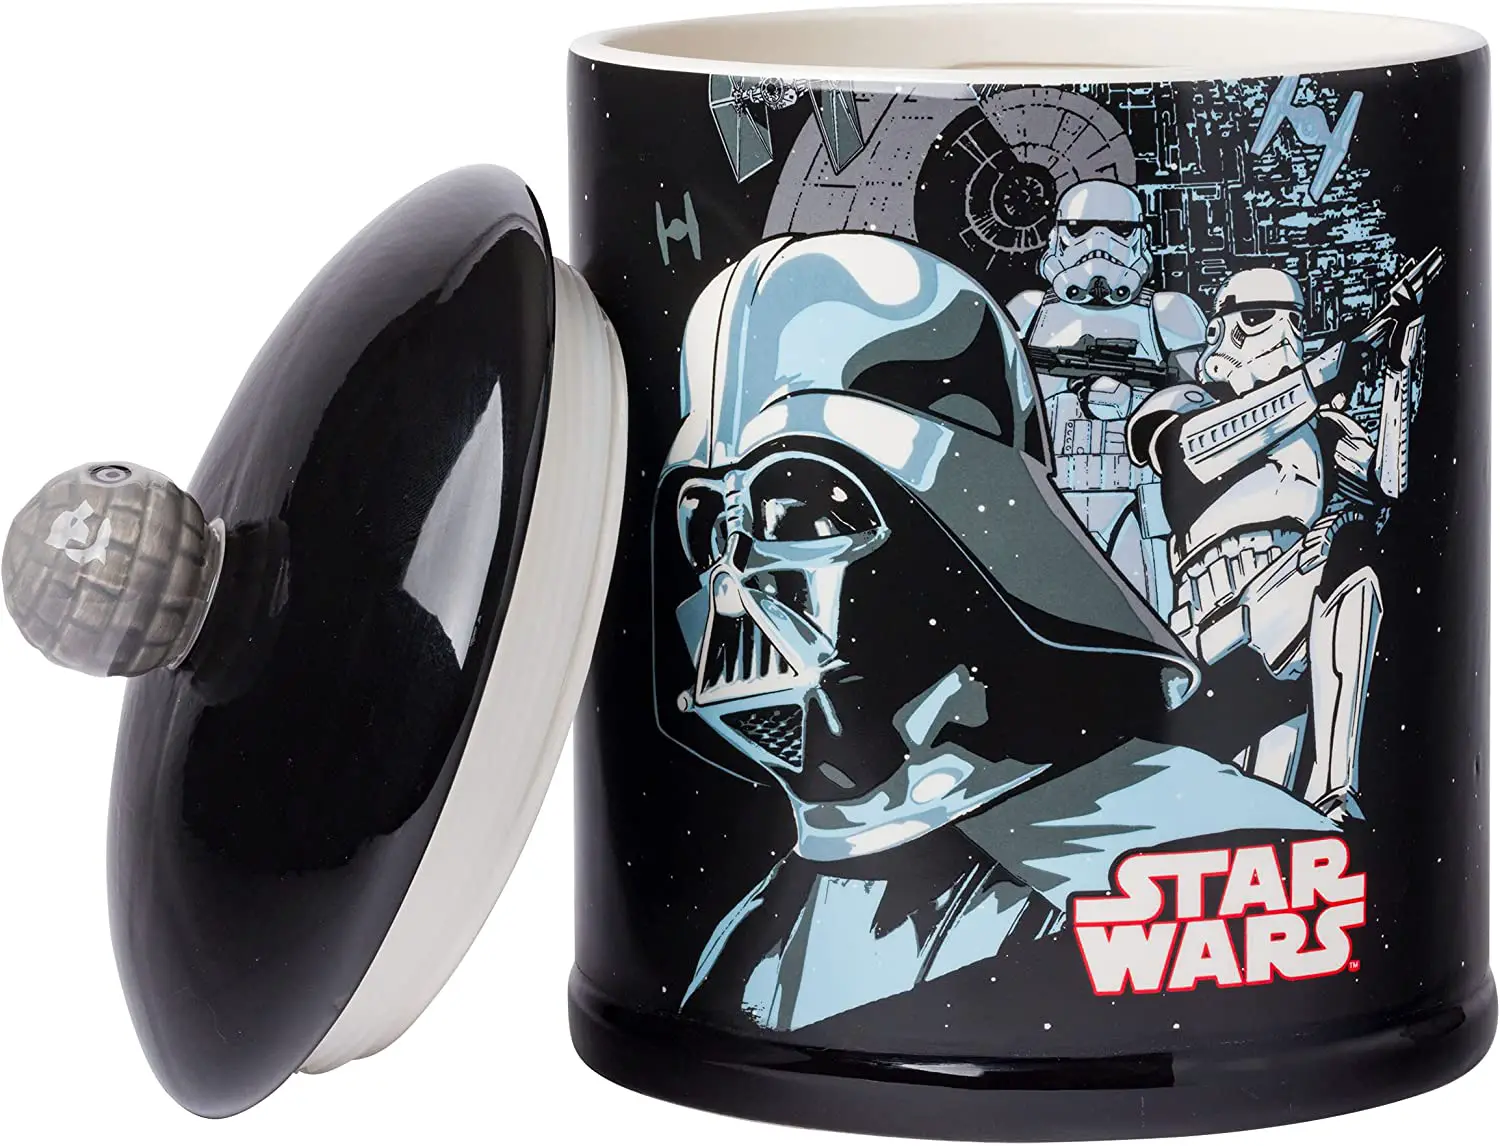 Star wars cookie jar - Silver Buffalo SW1338EG Star Wars Cookie Jar, Large, black - Image 1